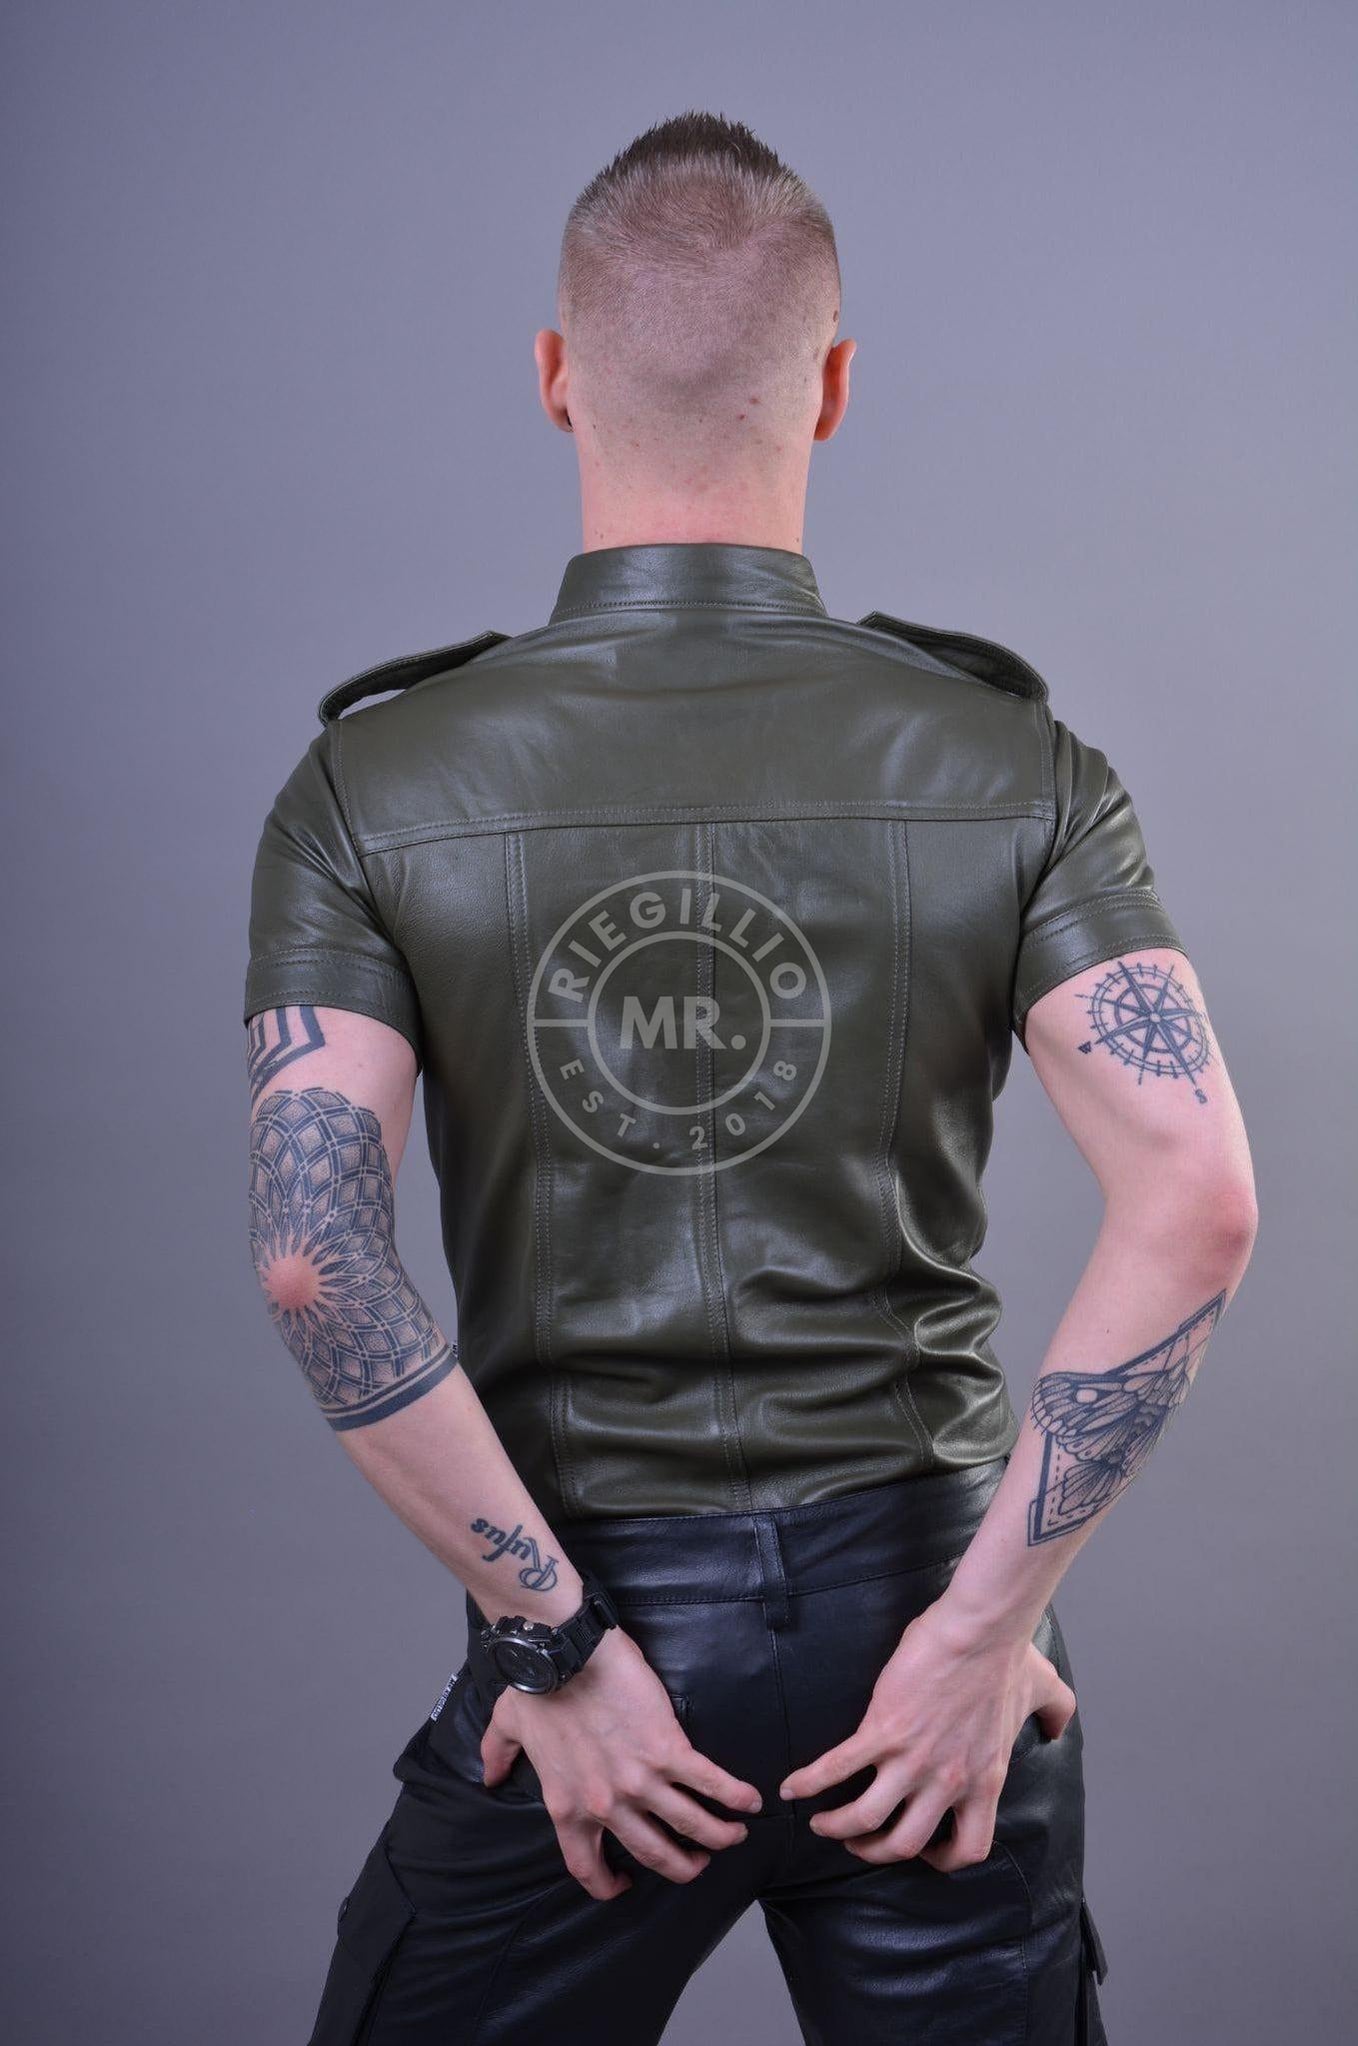 Army Green Leather Shirt at MR. Riegillio